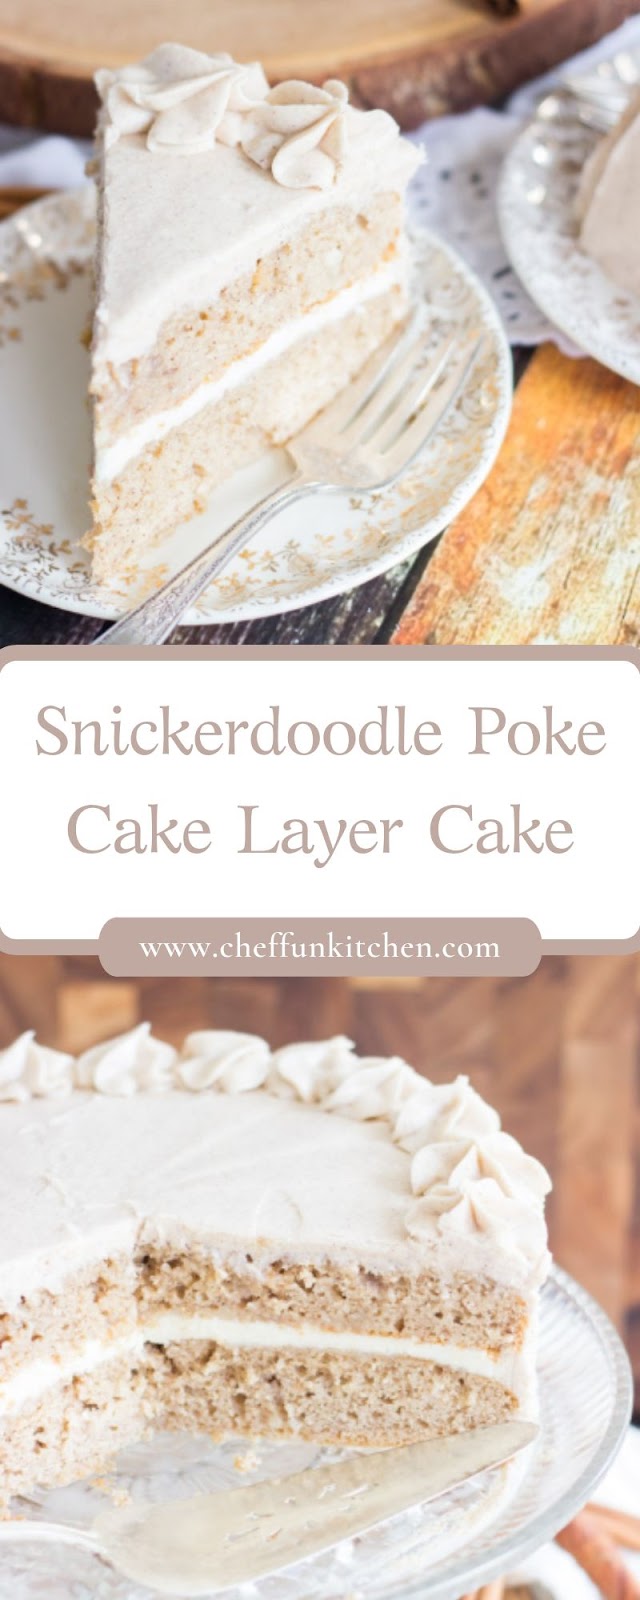 Snickerdoodle Poke Cake Layer Cake